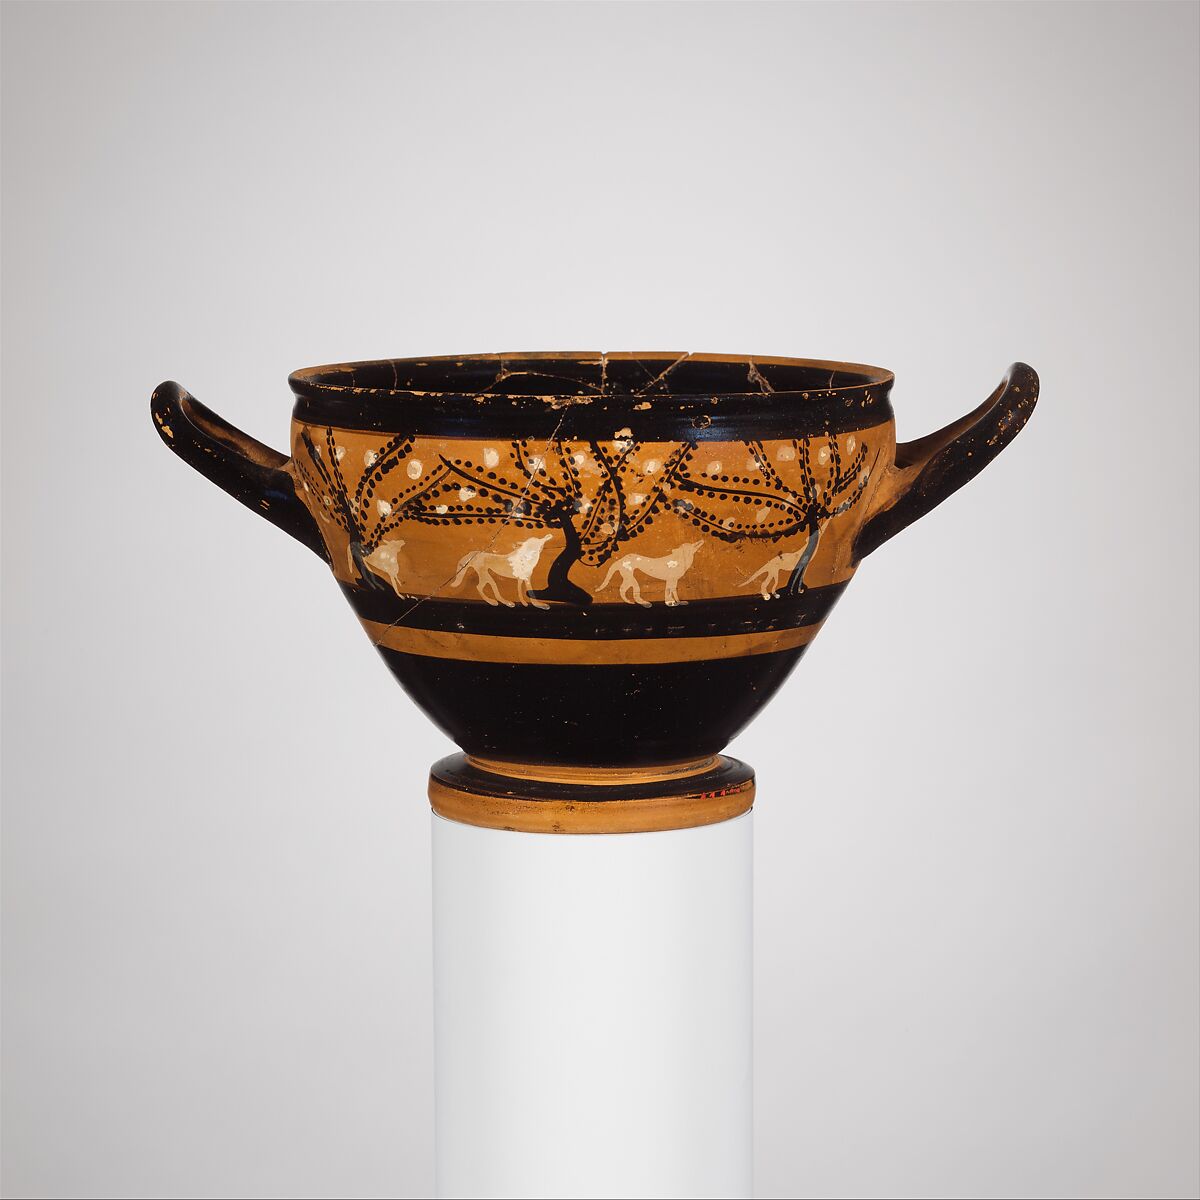 Terracotta skyphos (deep drinking cup), Terracotta, Greek, Attic 